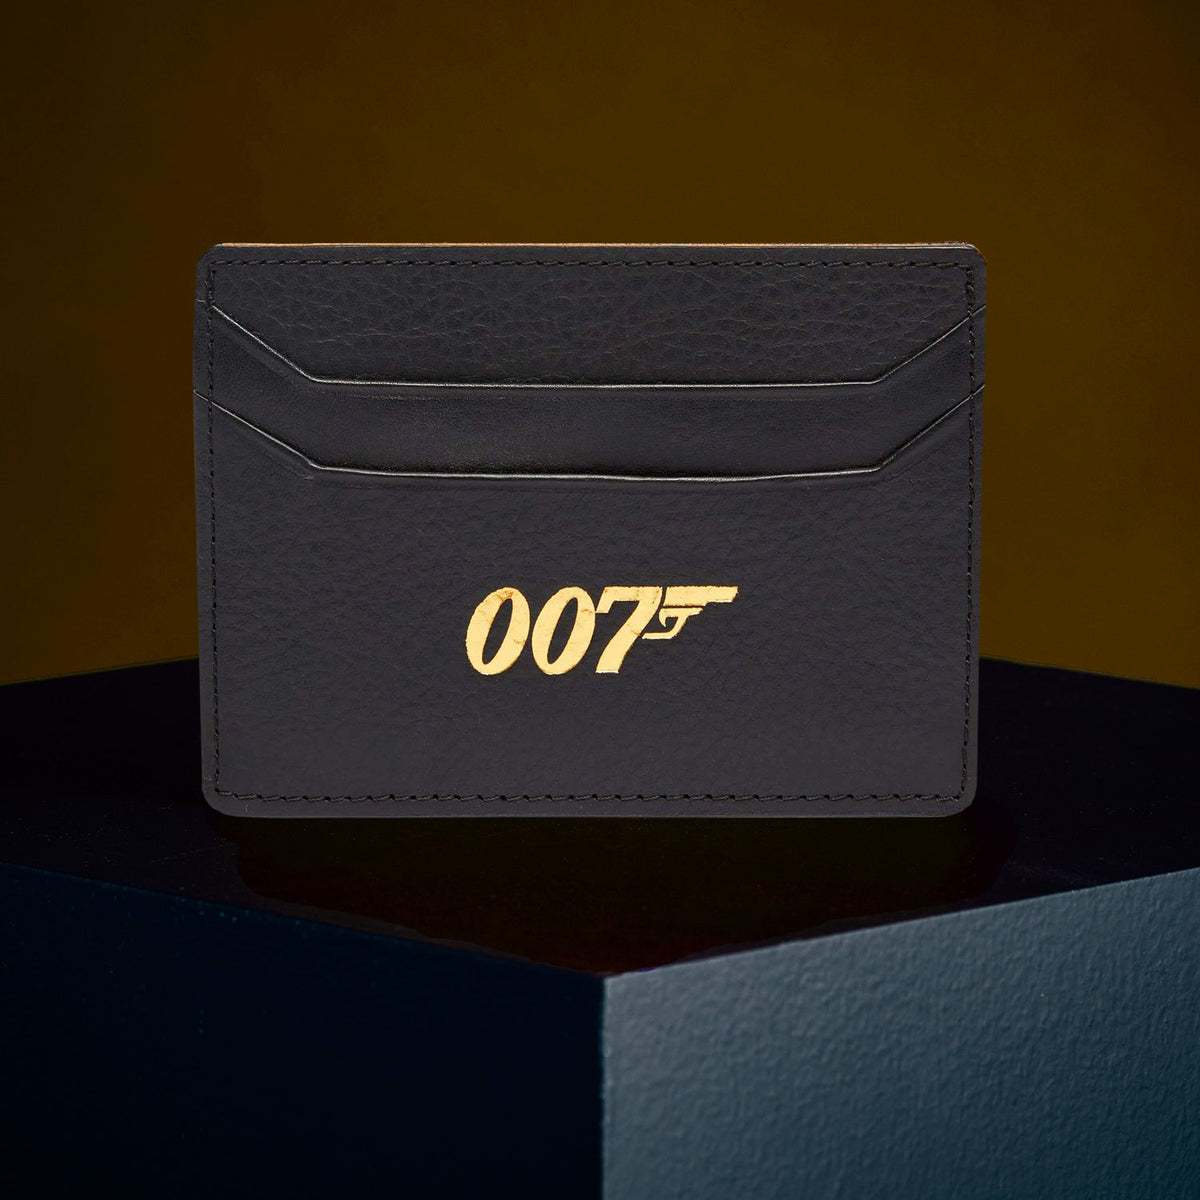 James Bond 007 Personalised Leather Card Holder in Black